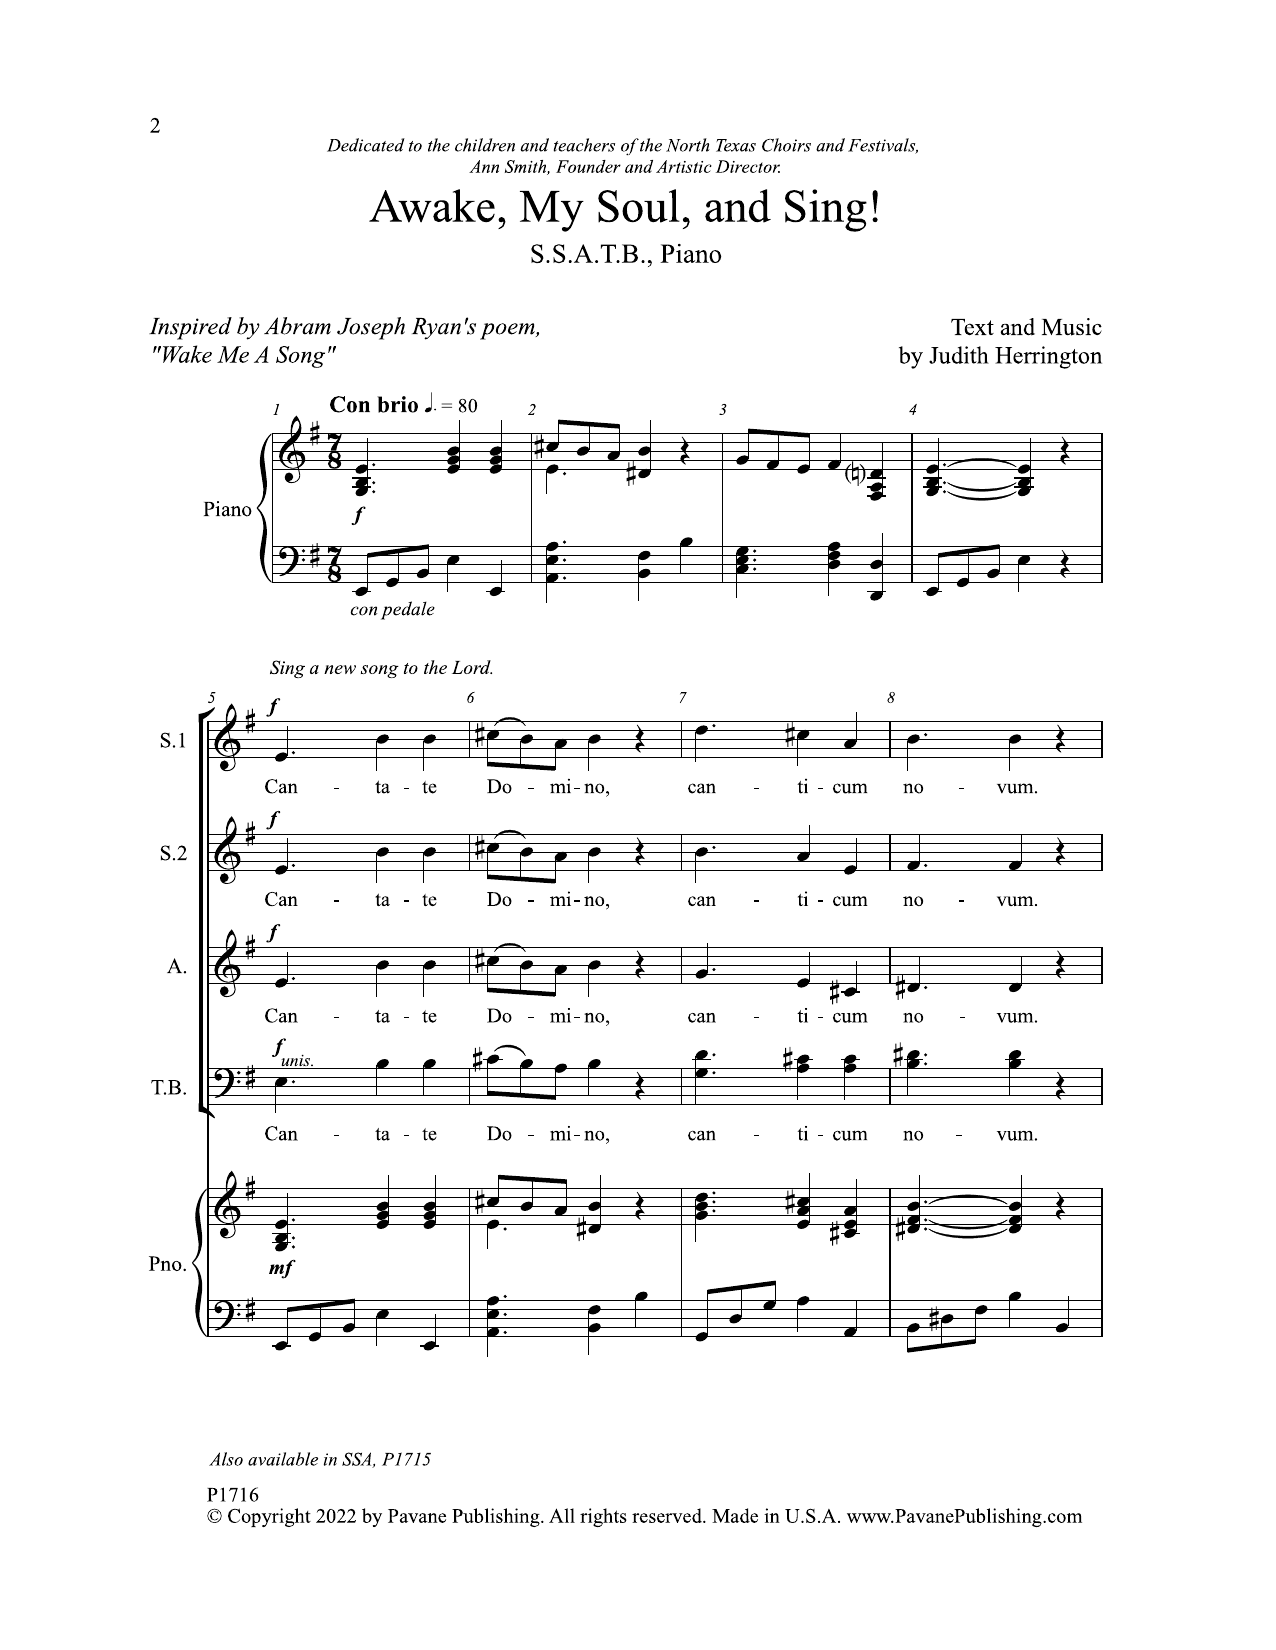 Judith Herrington Awake, My Soul, and Sing! Sheet Music Notes & Chords for SSA Choir - Download or Print PDF